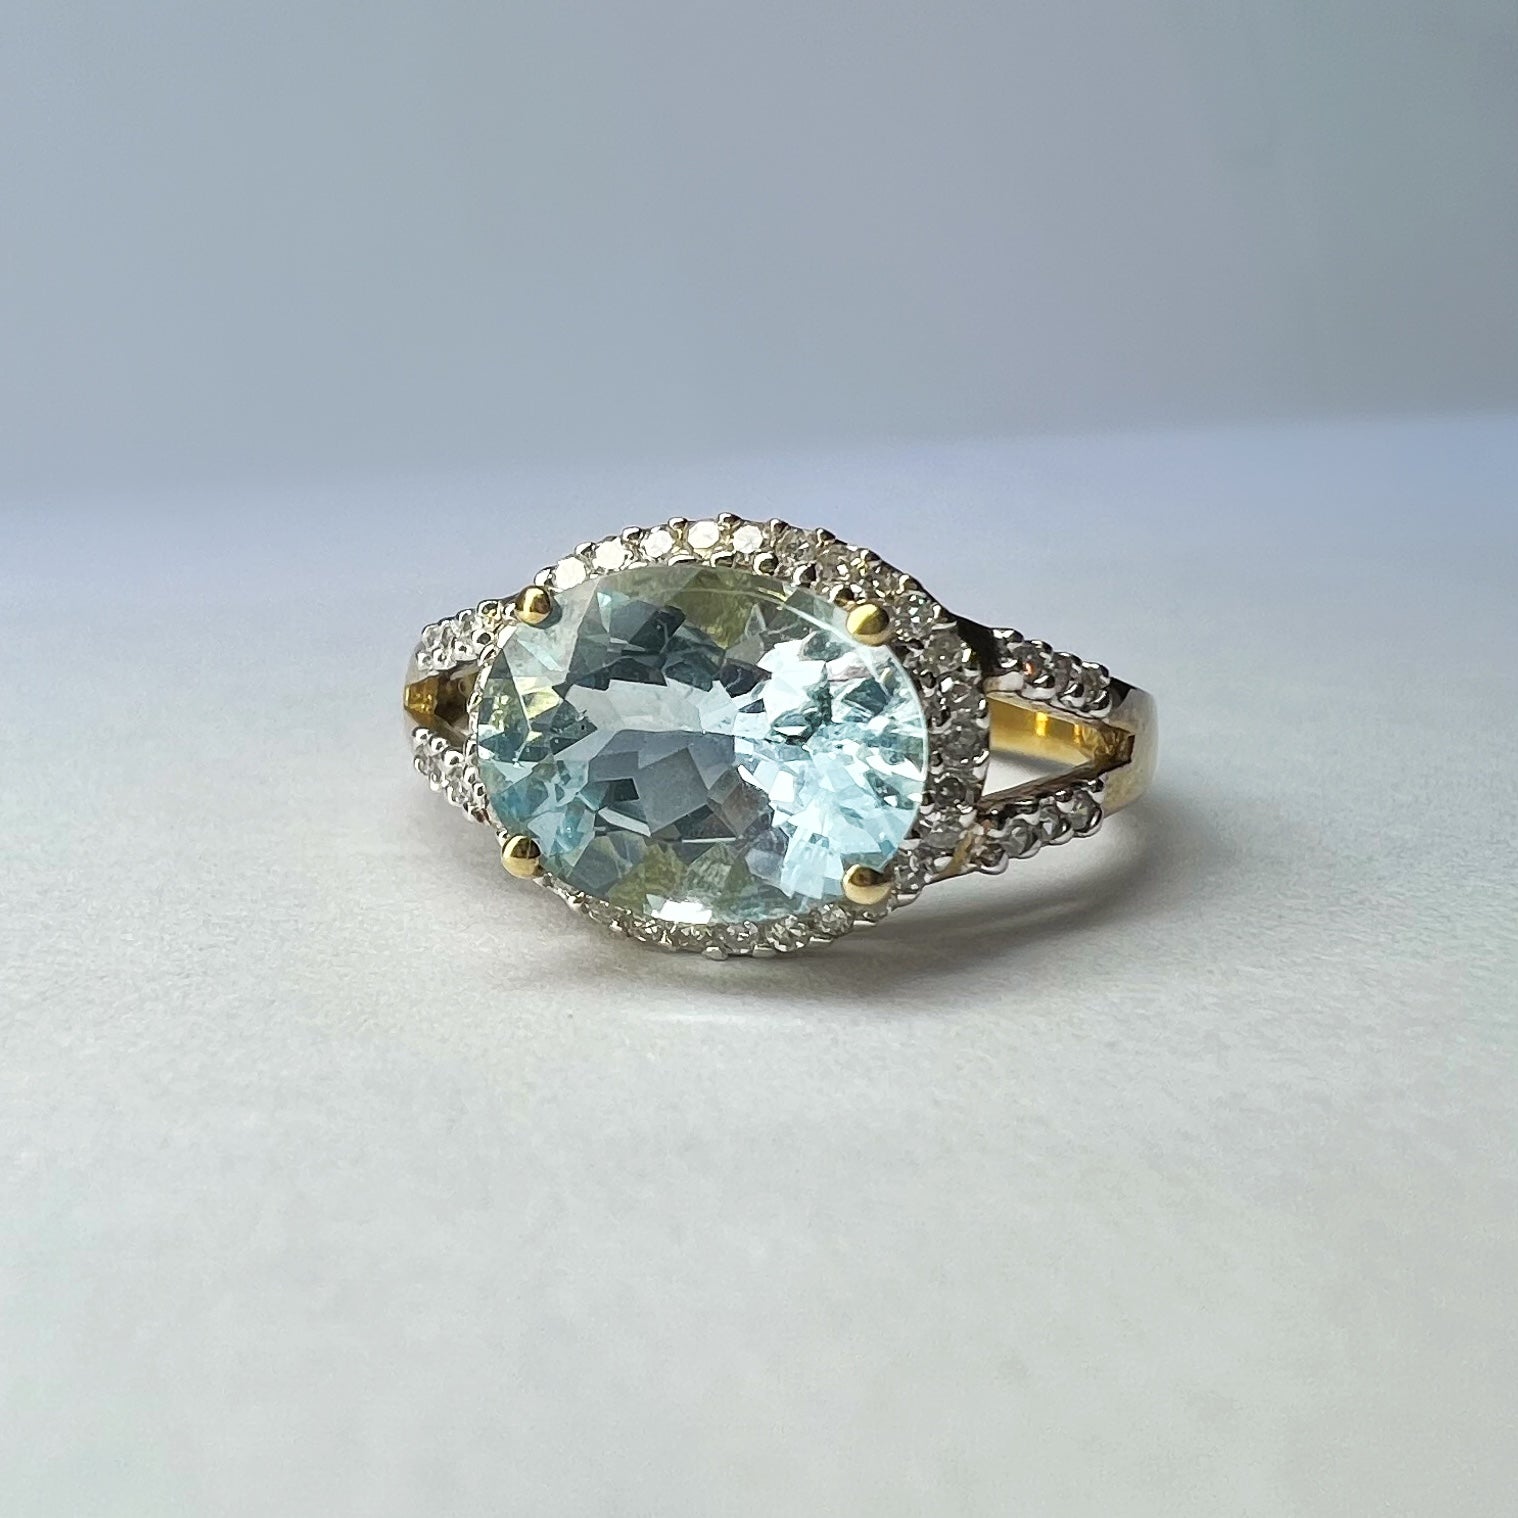 Blue Topaz and Diamond Halo Ring